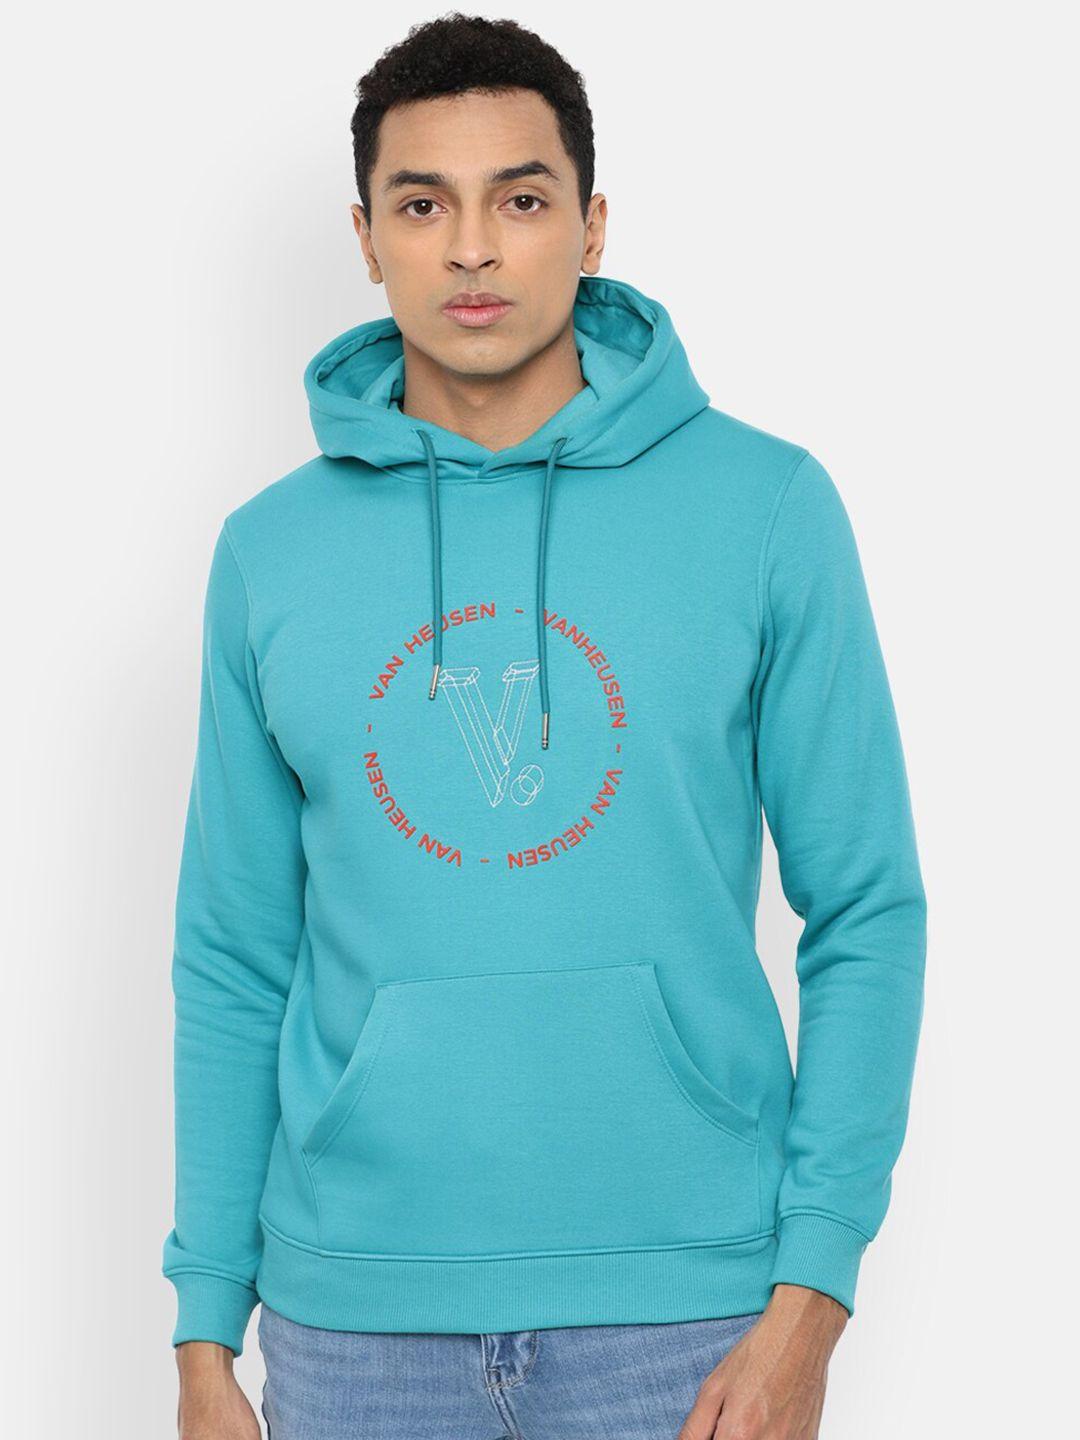 v dot men blue printed hooded sweatshirt